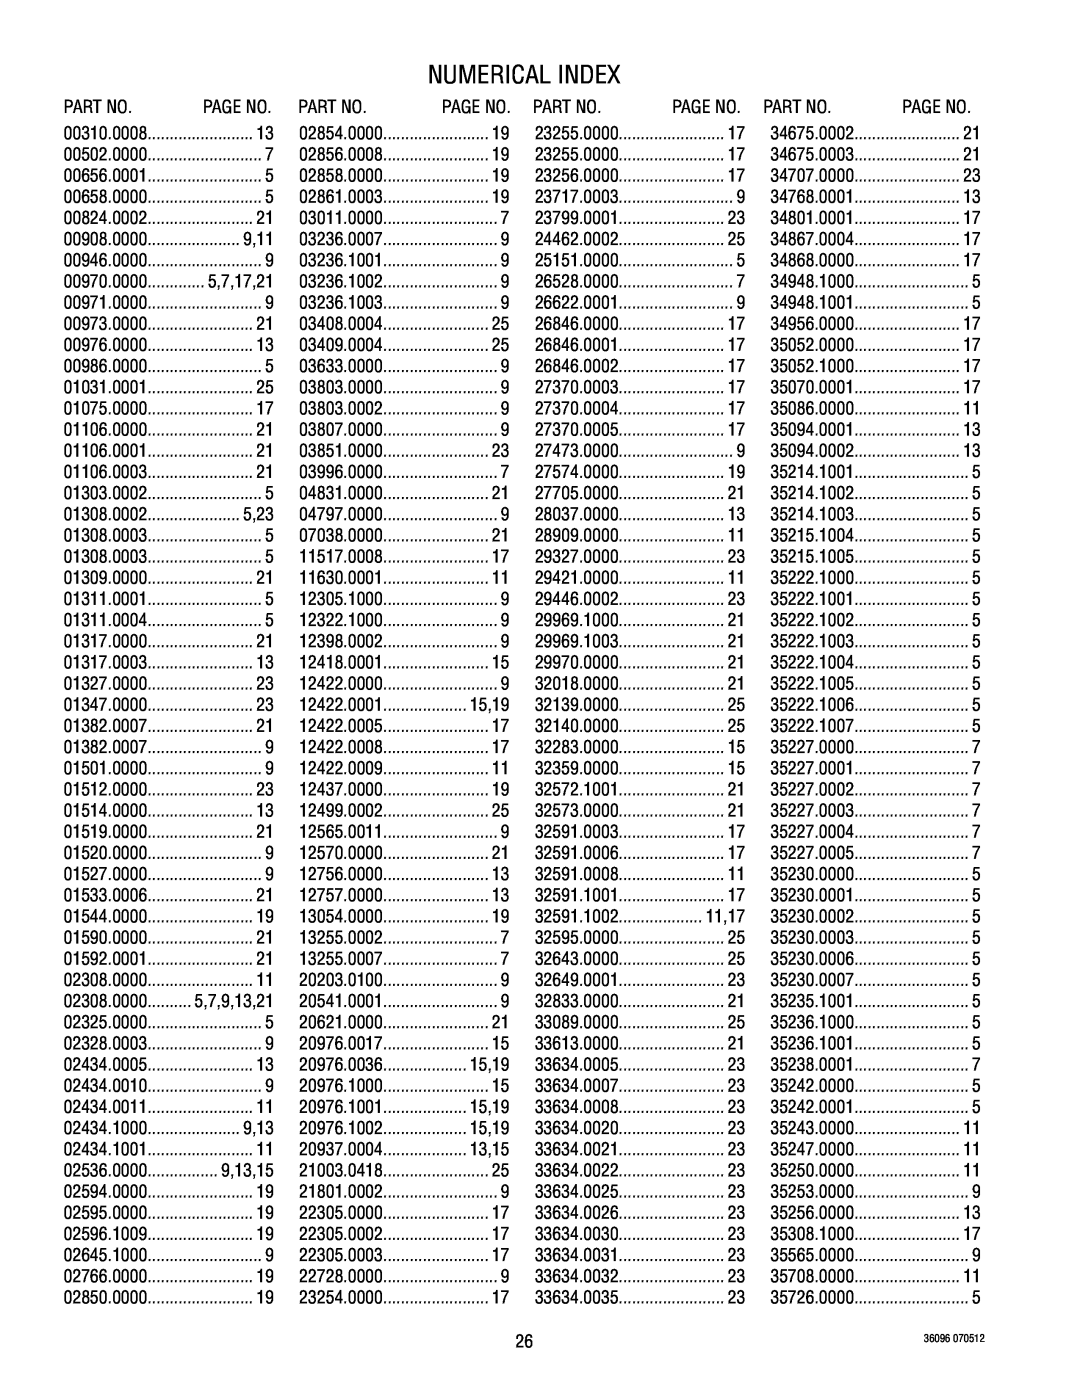 Bunn 360960001D specifications Numerical Index 